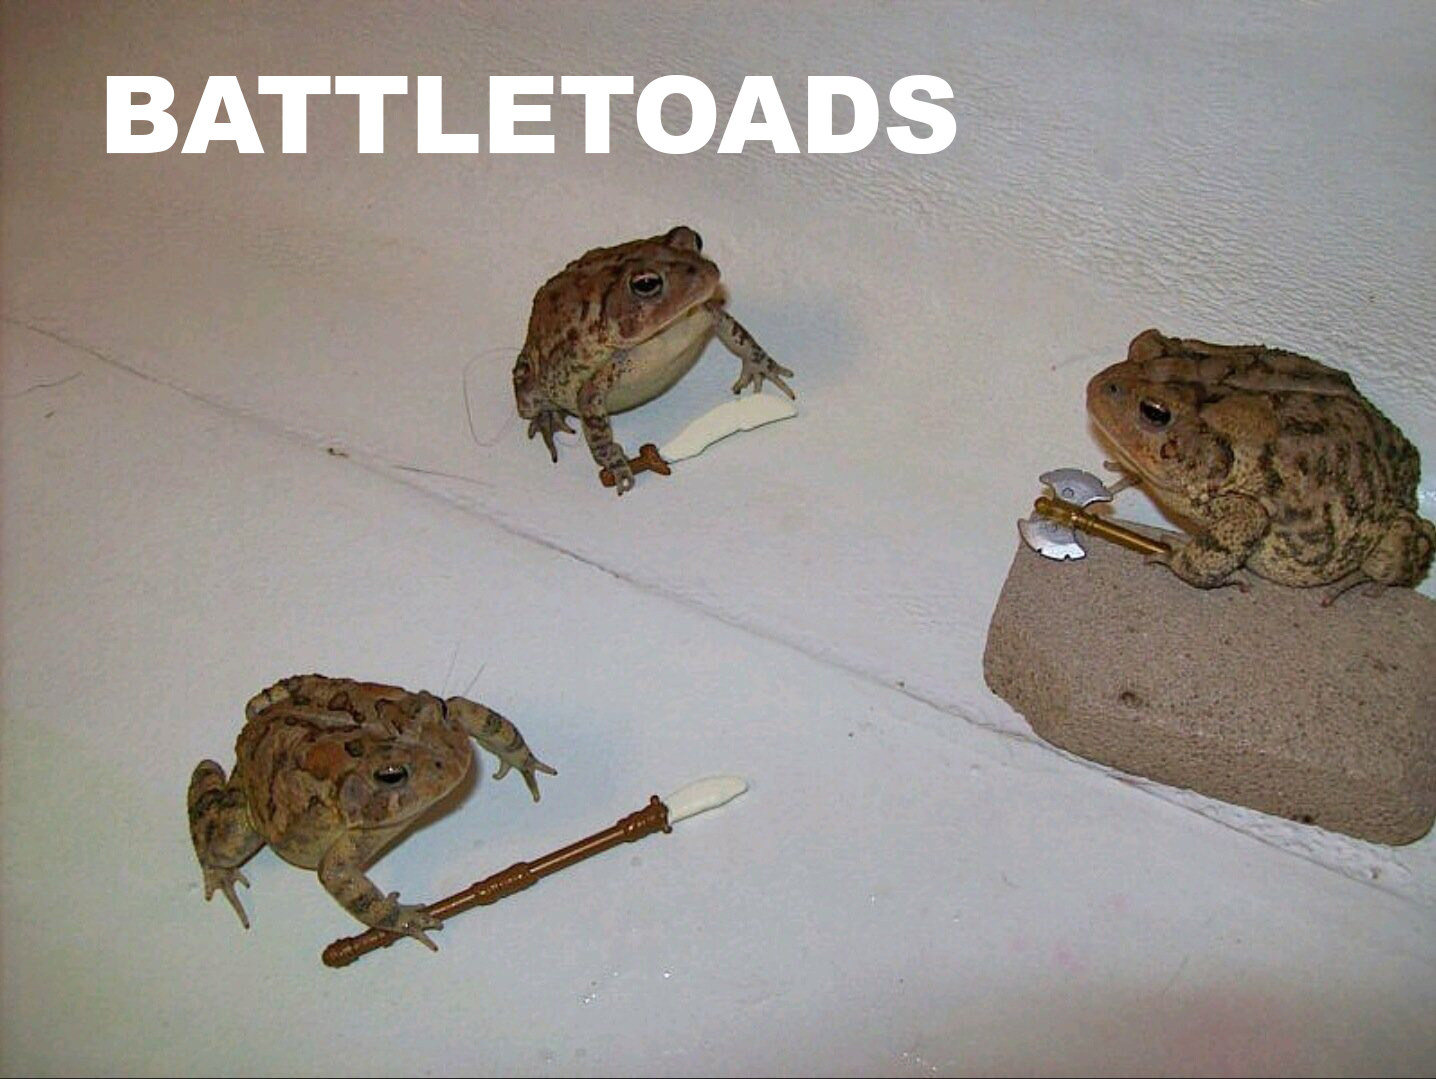 battle toads - Battletoads